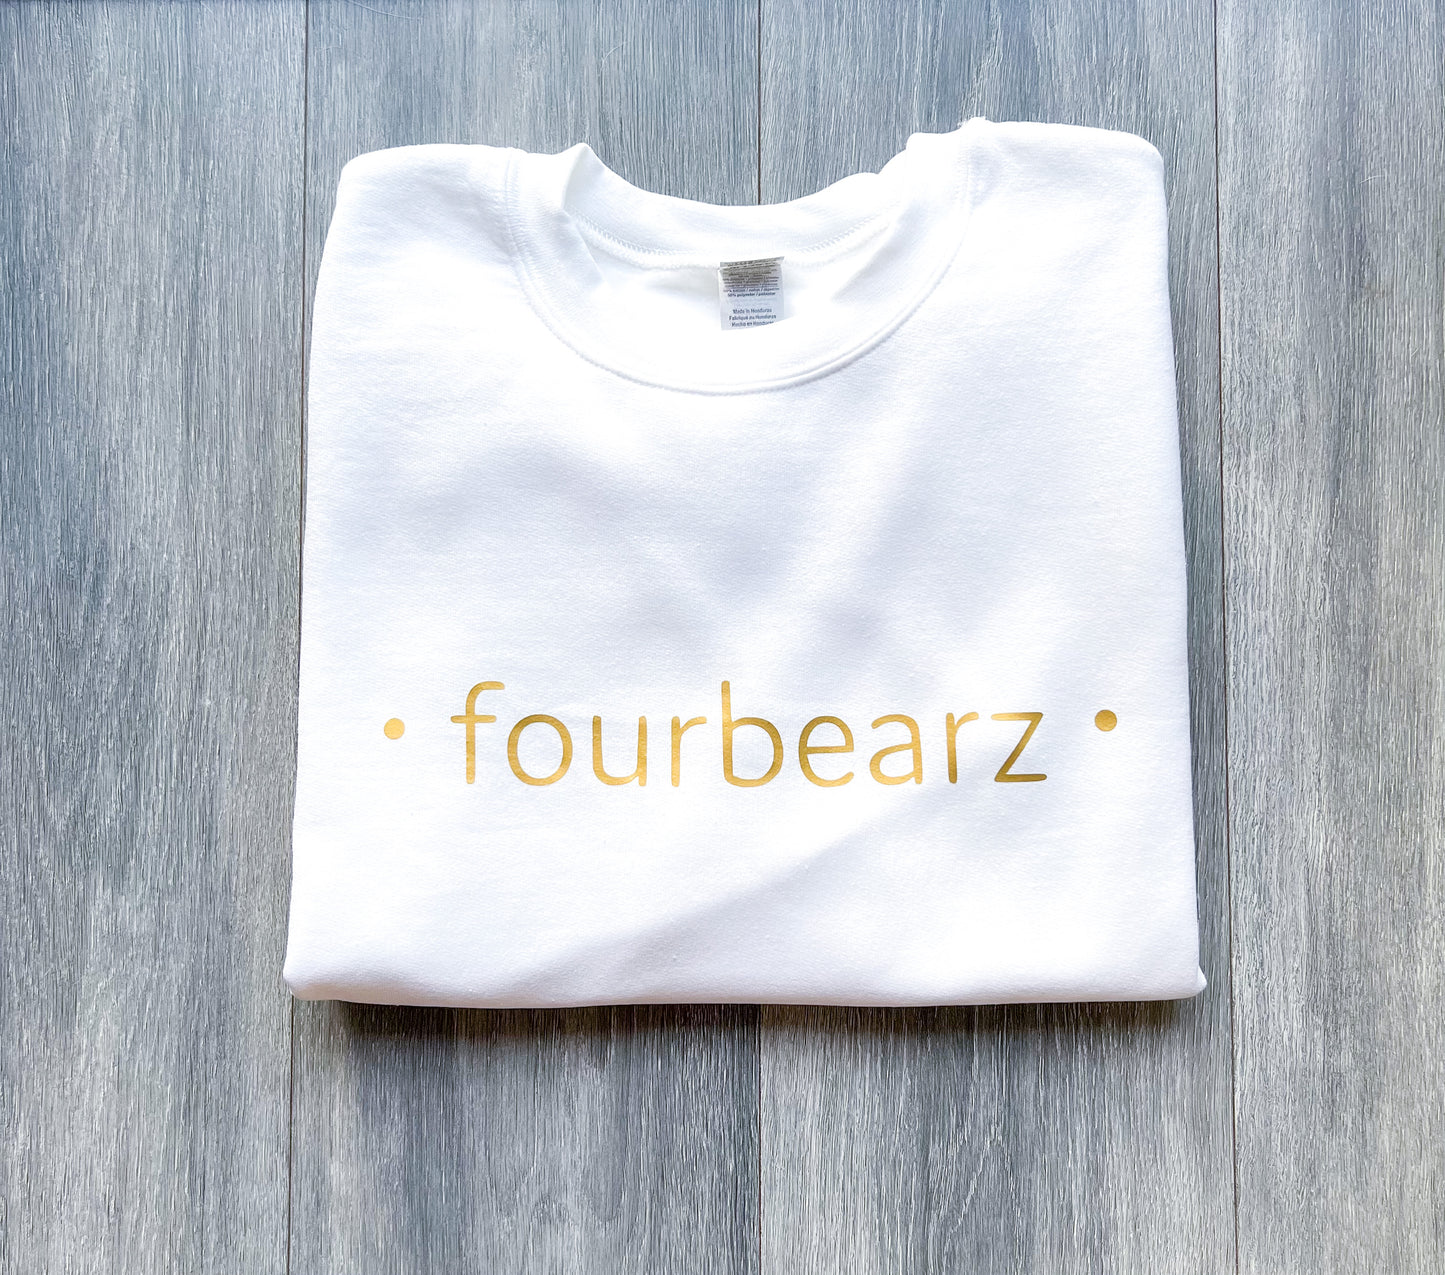 fourbearz Crewneck Sweatshirt